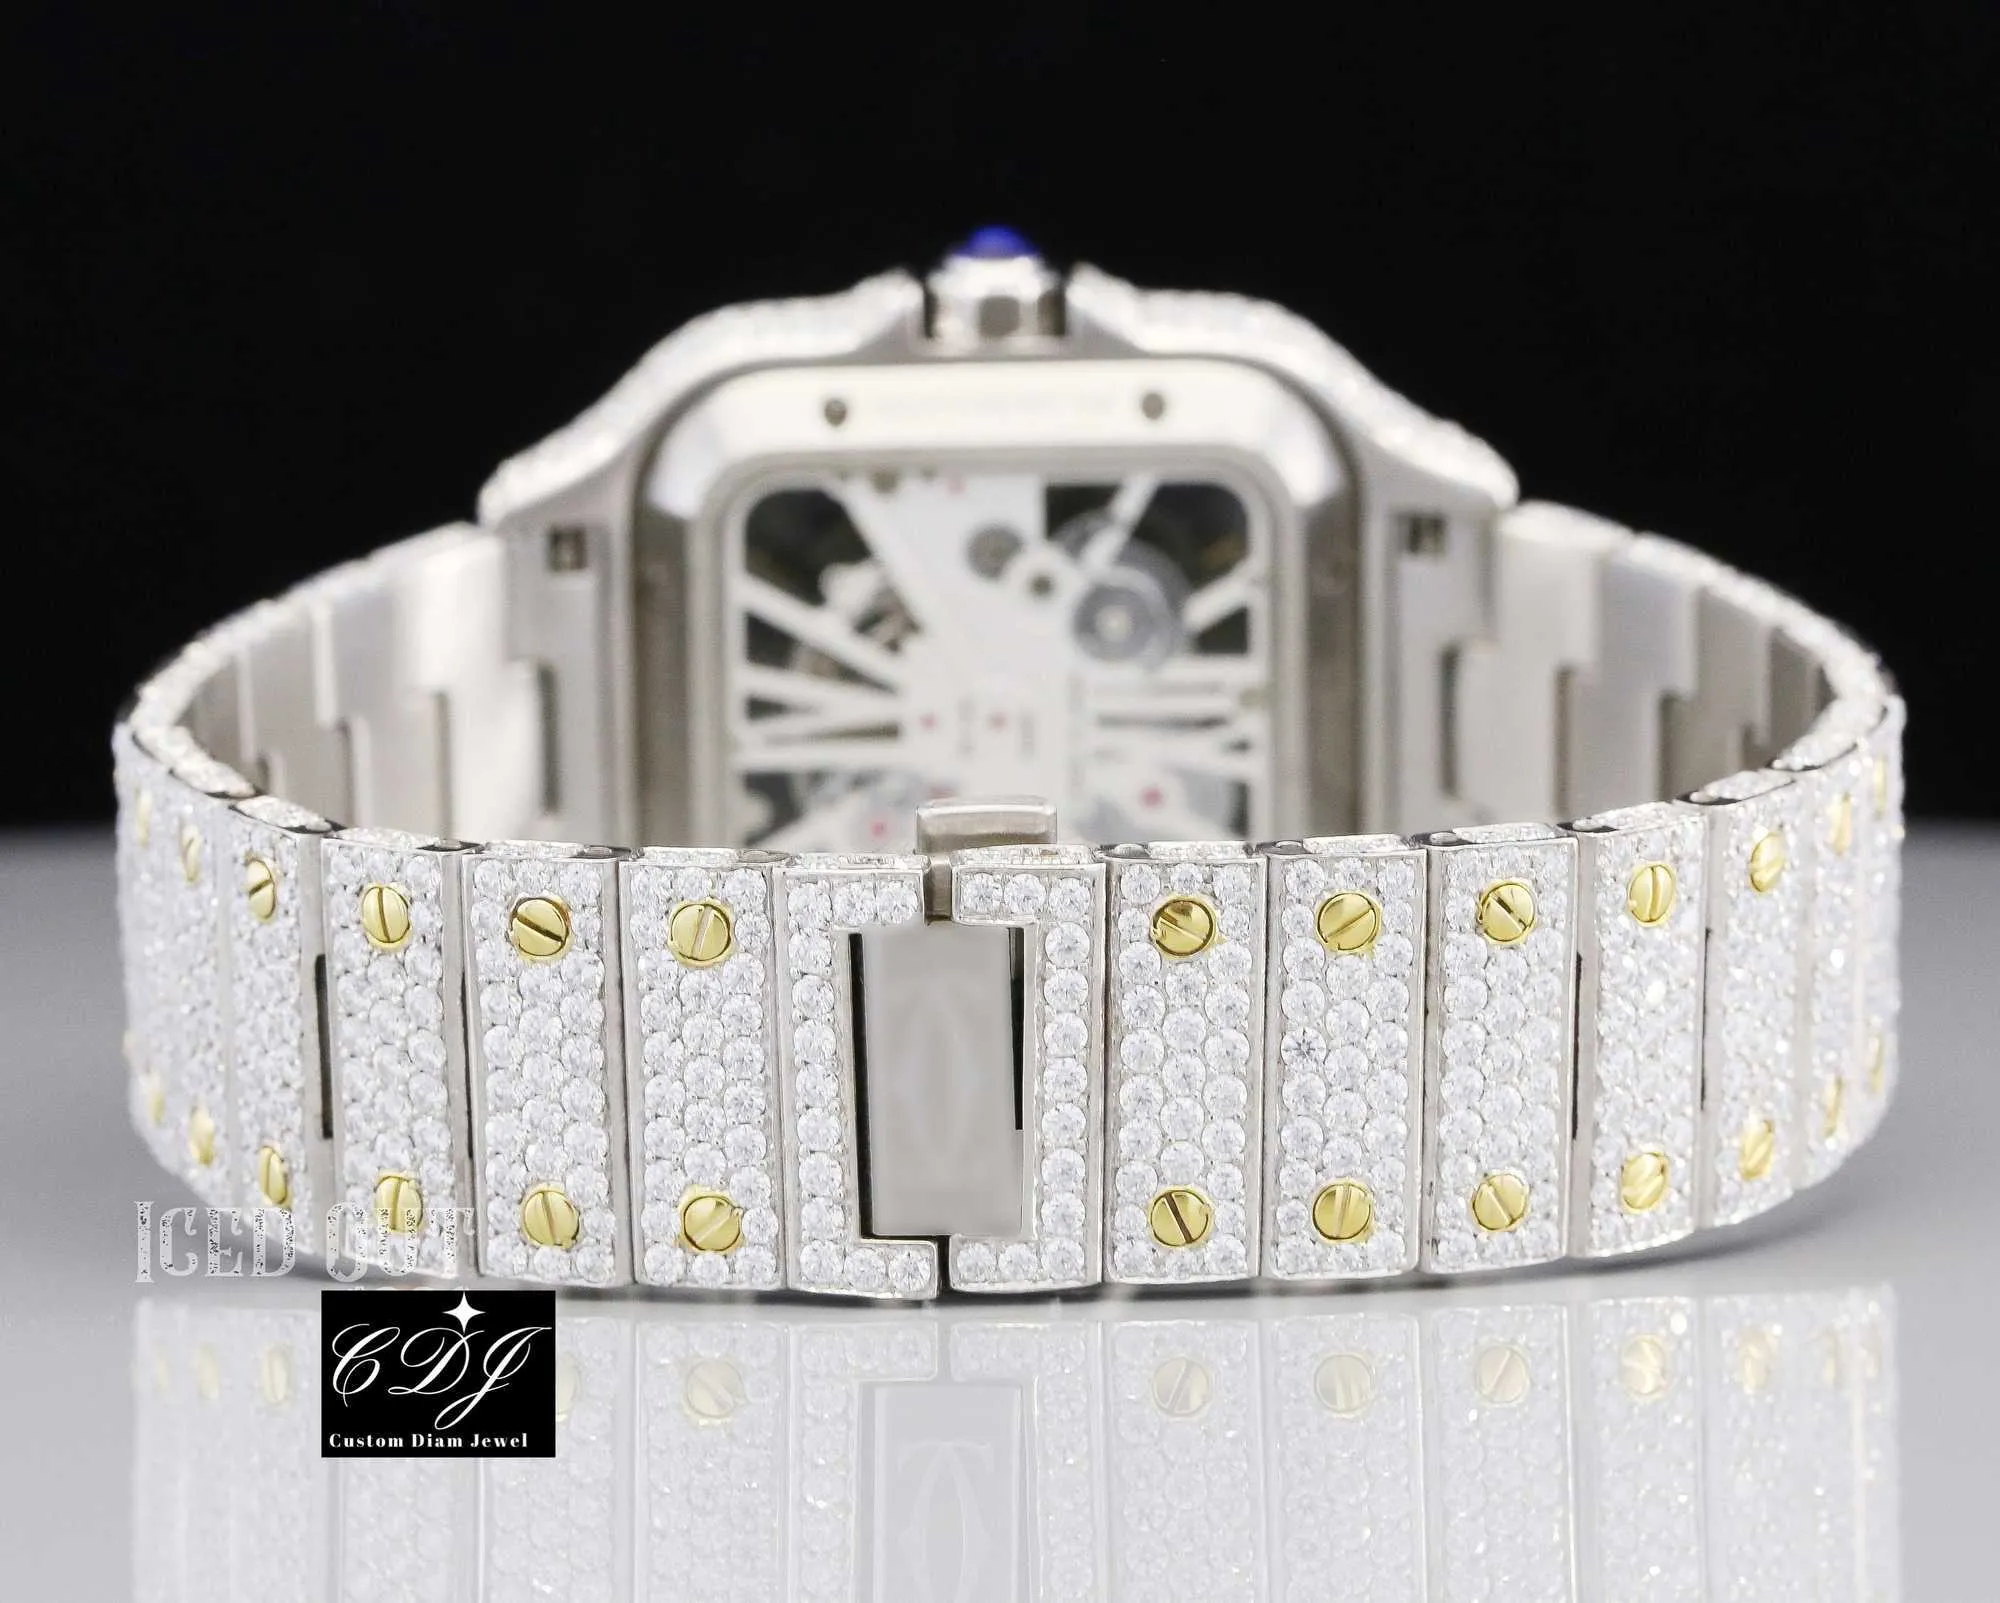 0W7M Mechanical High End Top Brand Custom Moissanite Watch luxury Original Hand Set Iced out diamond Hip Hop Bust DowVHNMQ0LFZ1YL